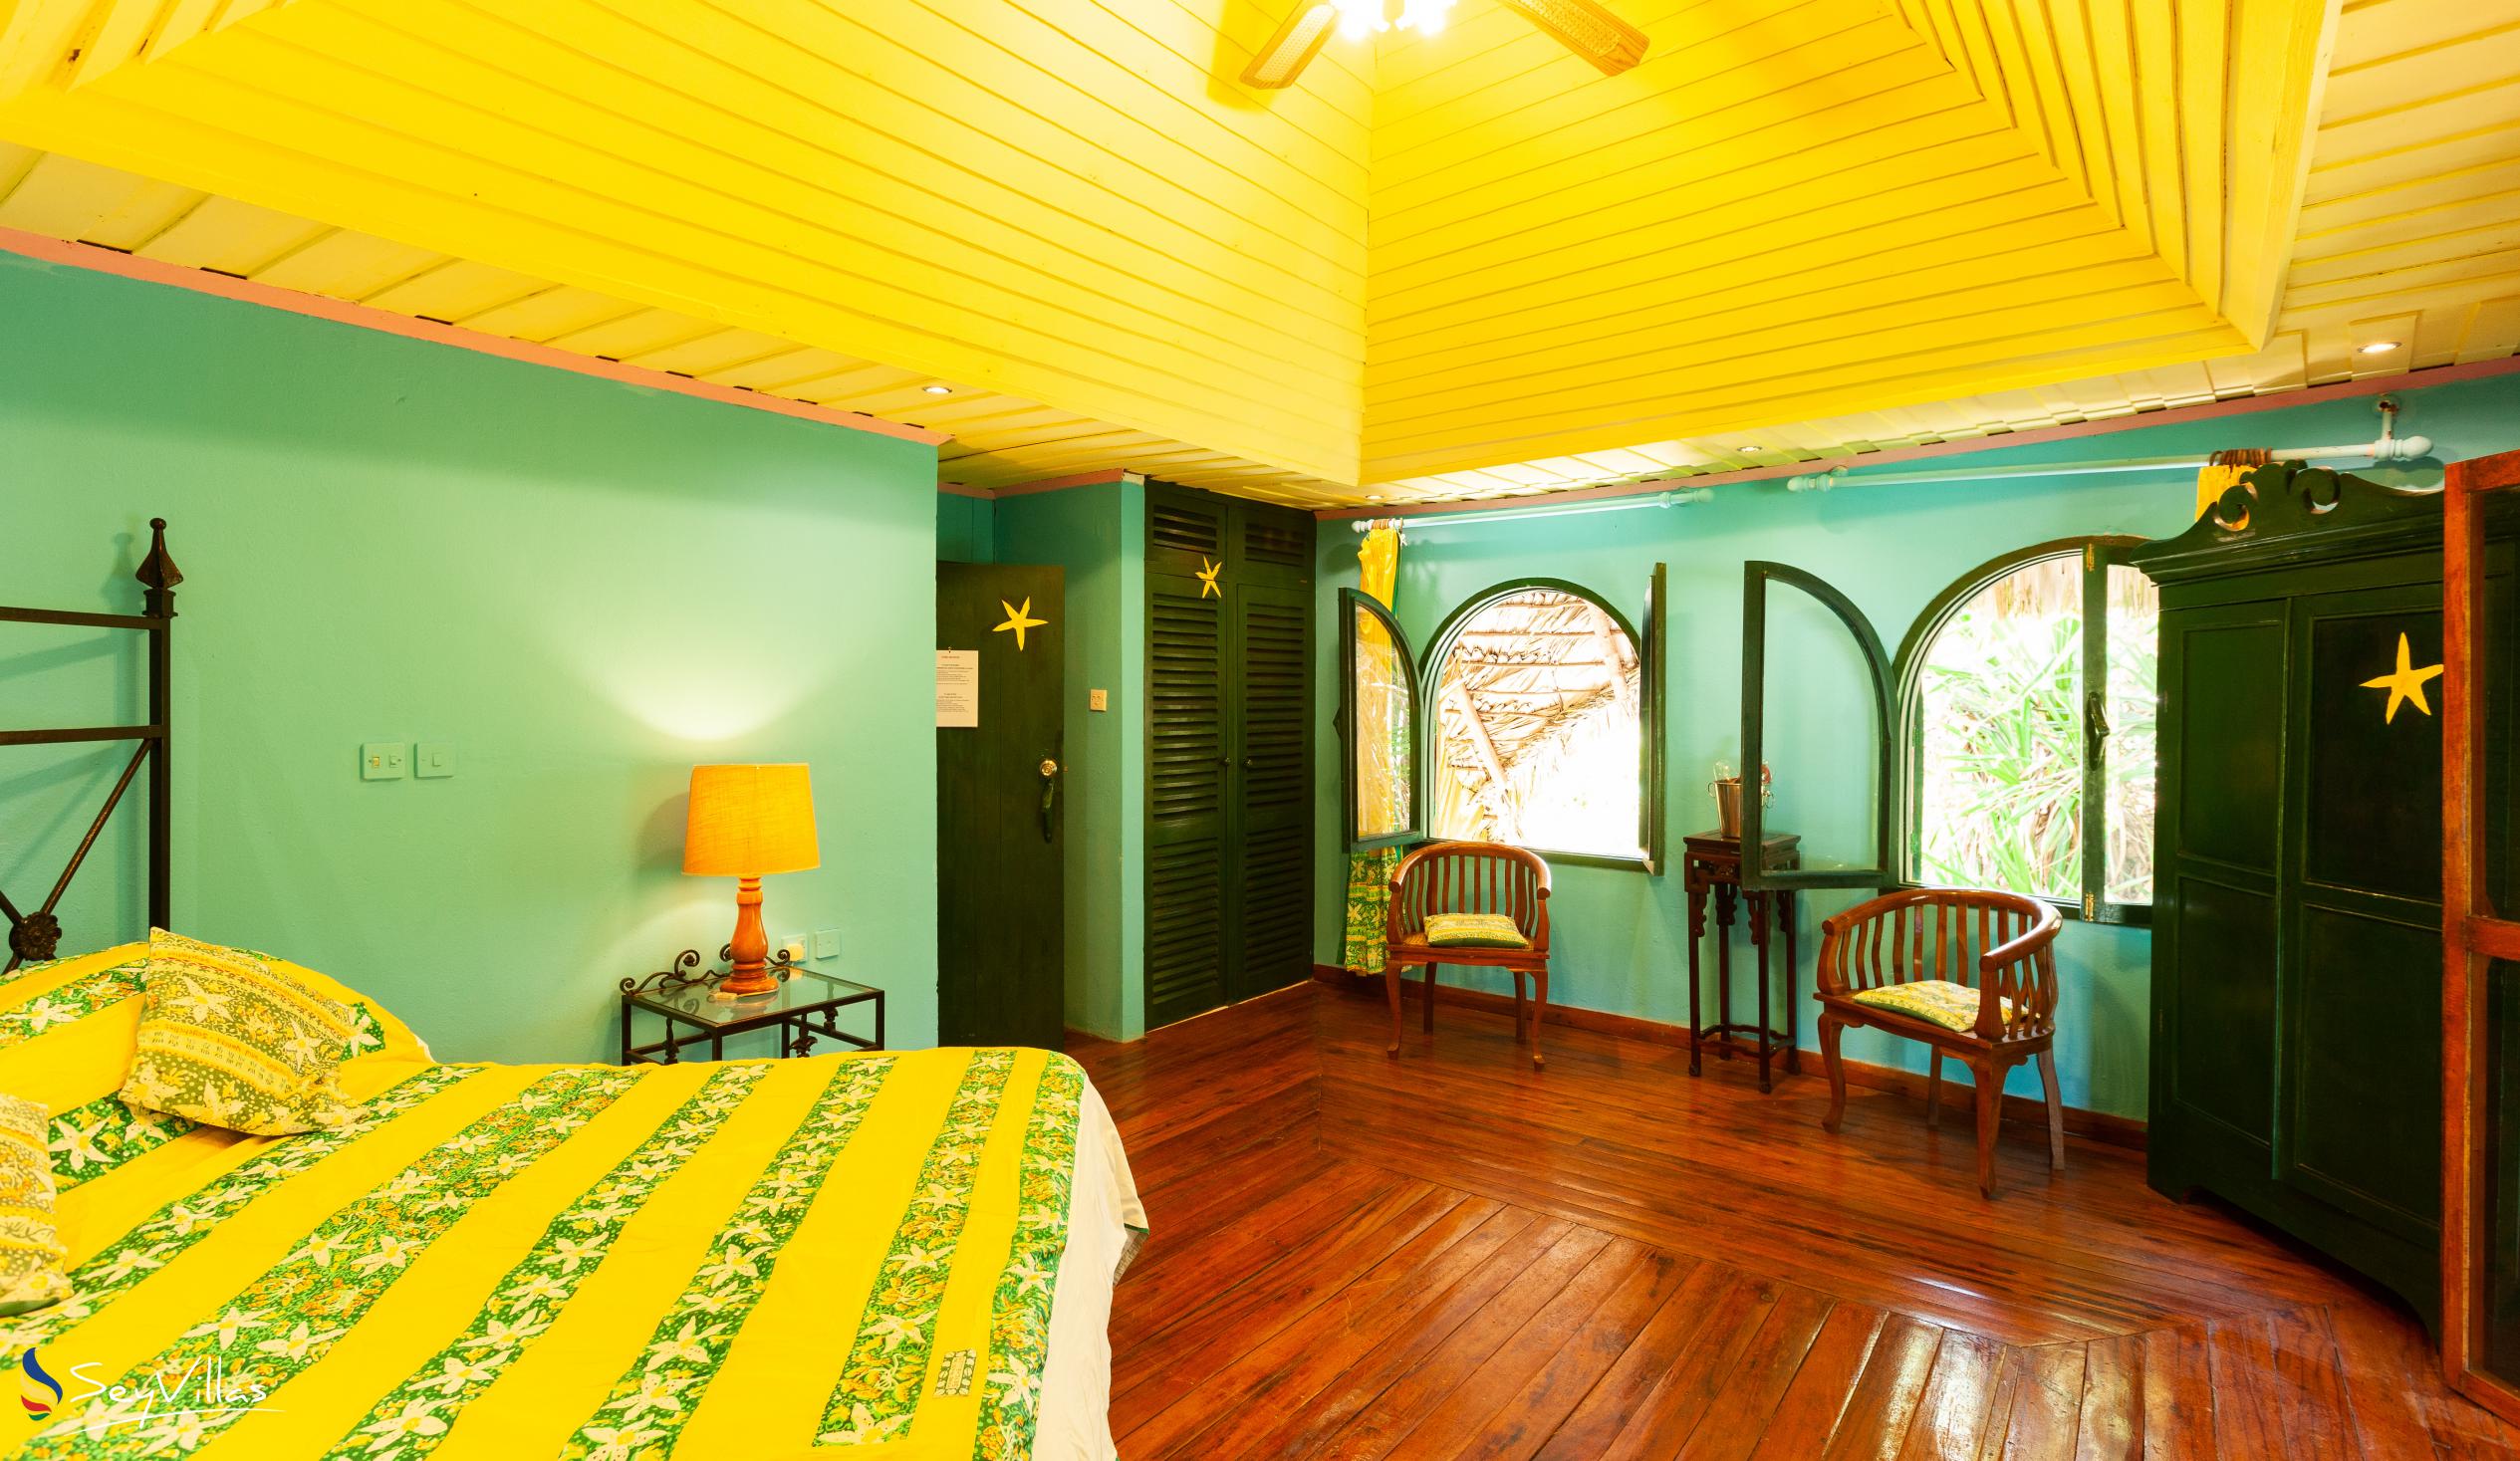 Photo 52: Chauve Souris Relais - Creol Room - Praslin (Seychelles)